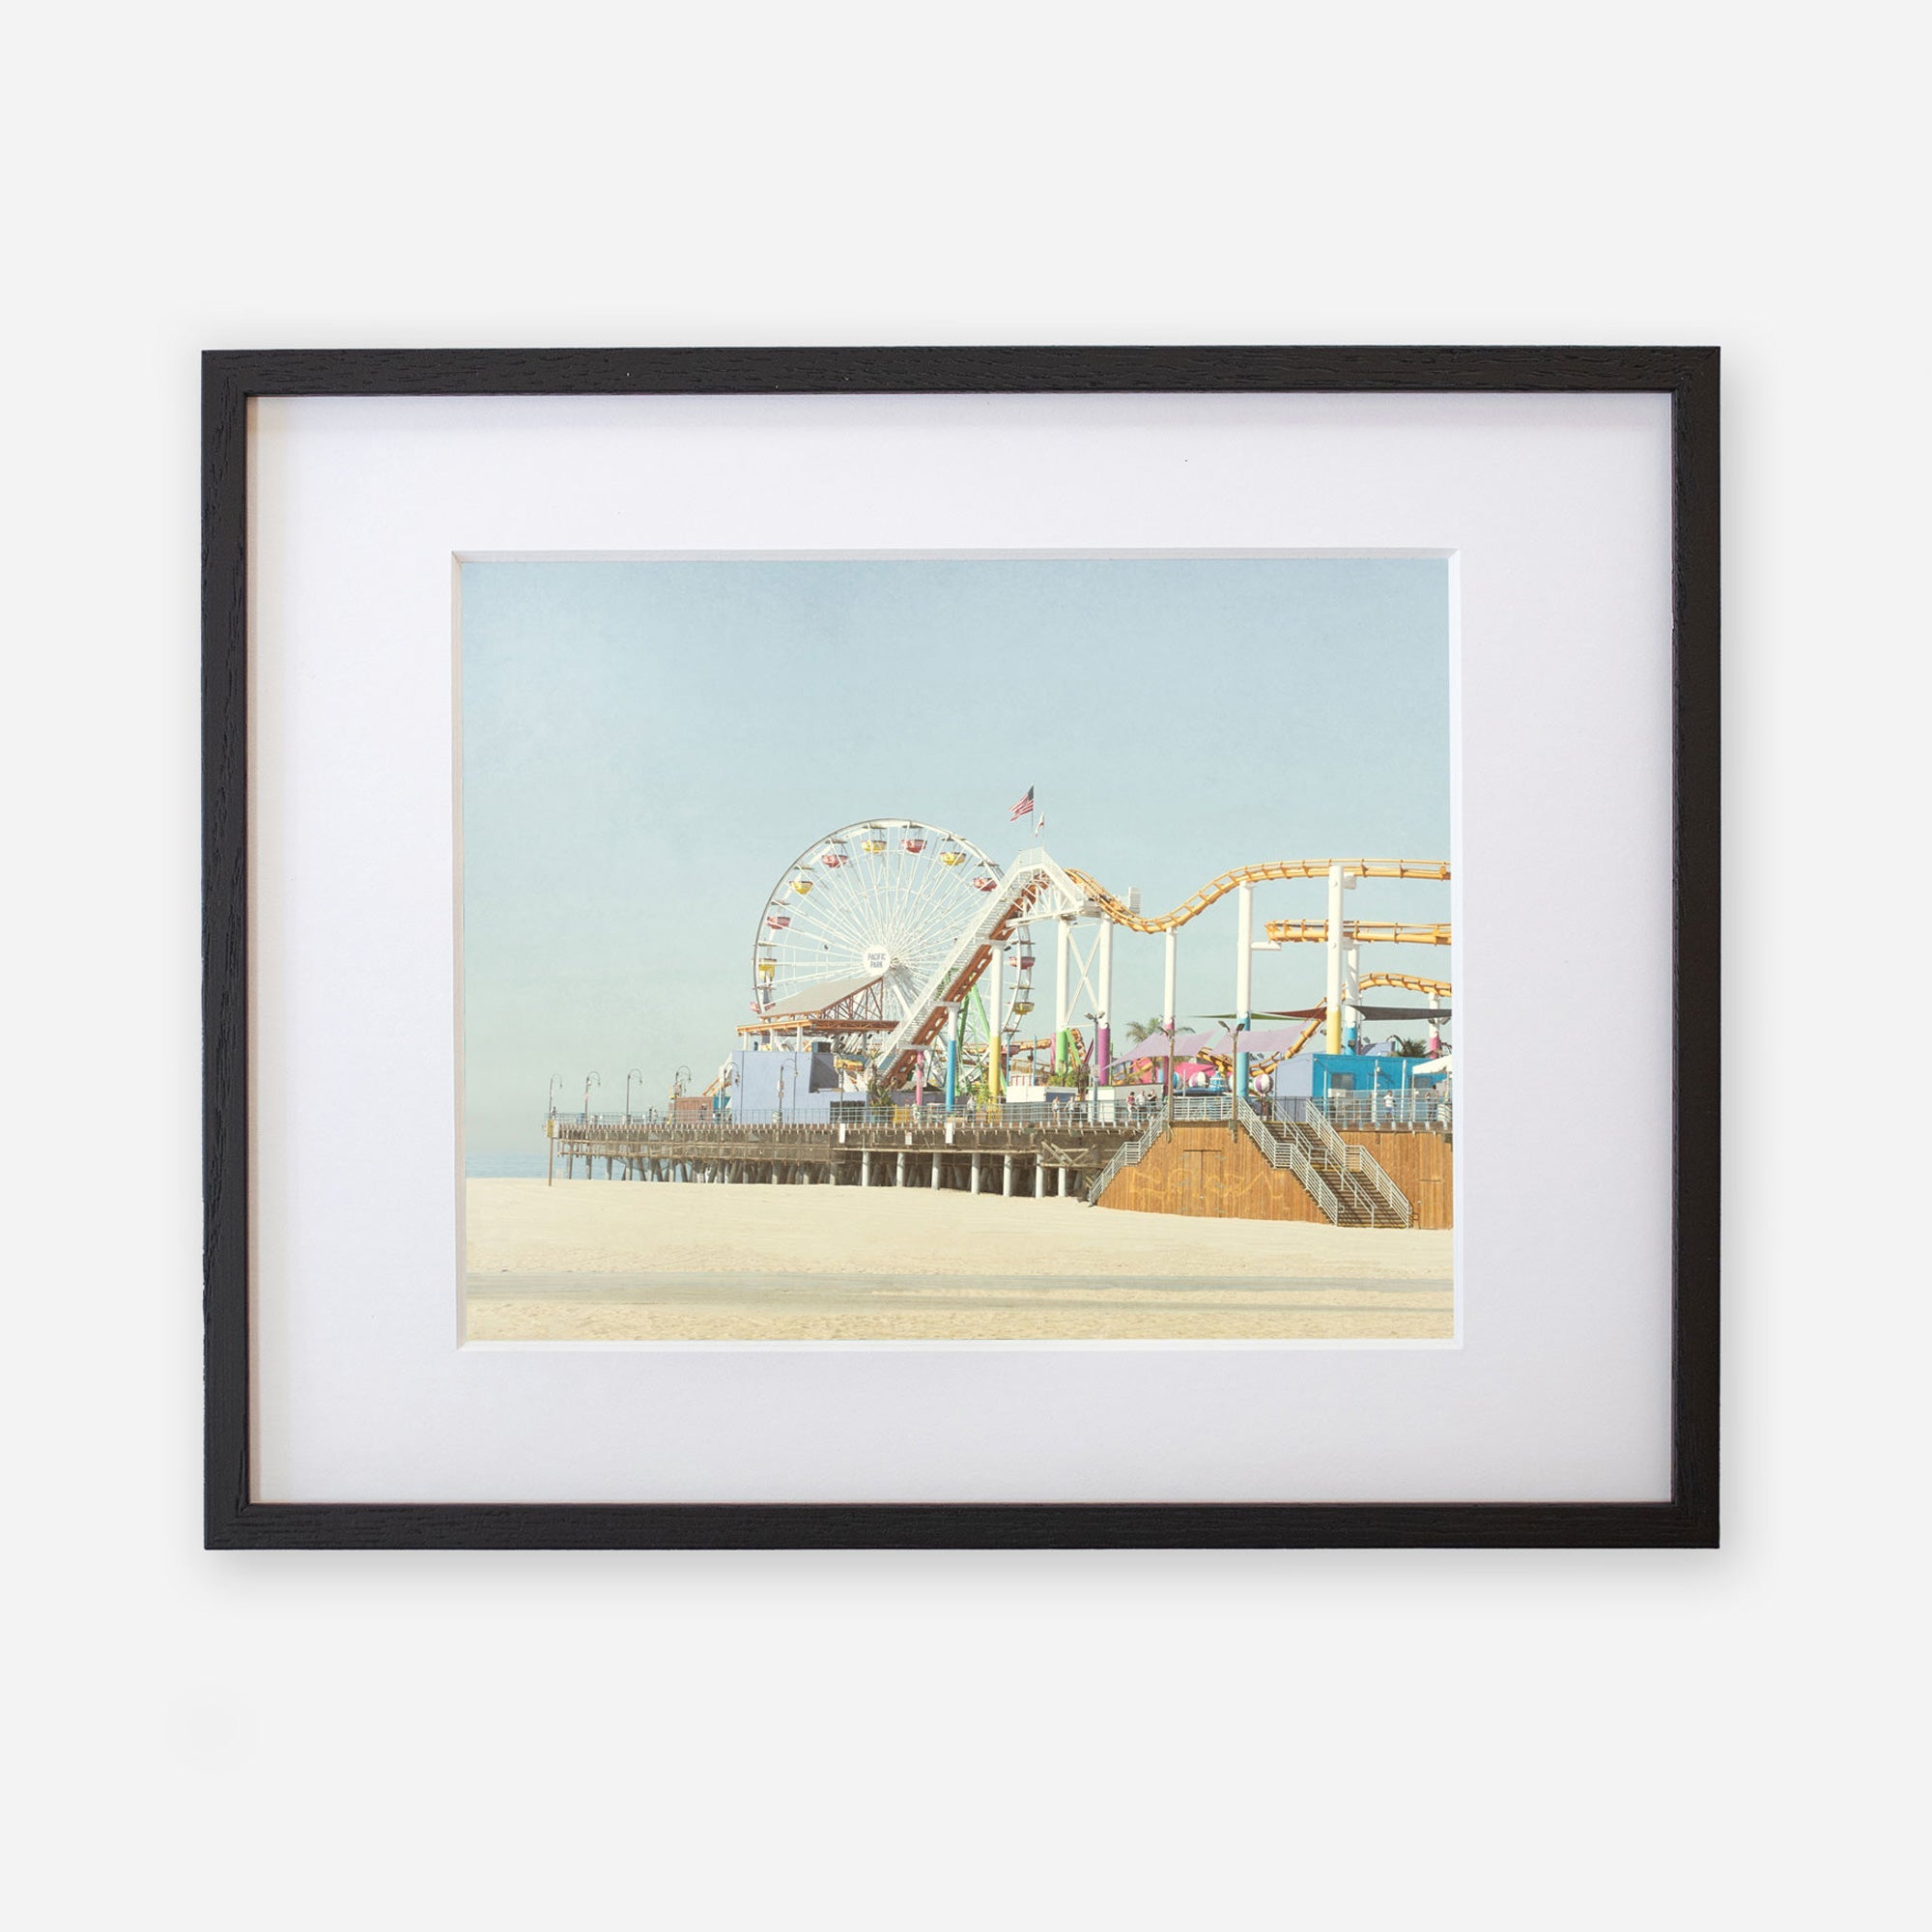 A framed Offley Green California Print, &#39;Santa Monica Pier&#39;, featuring a ferris wheel and roller coaster, displayed against a light blue sky.